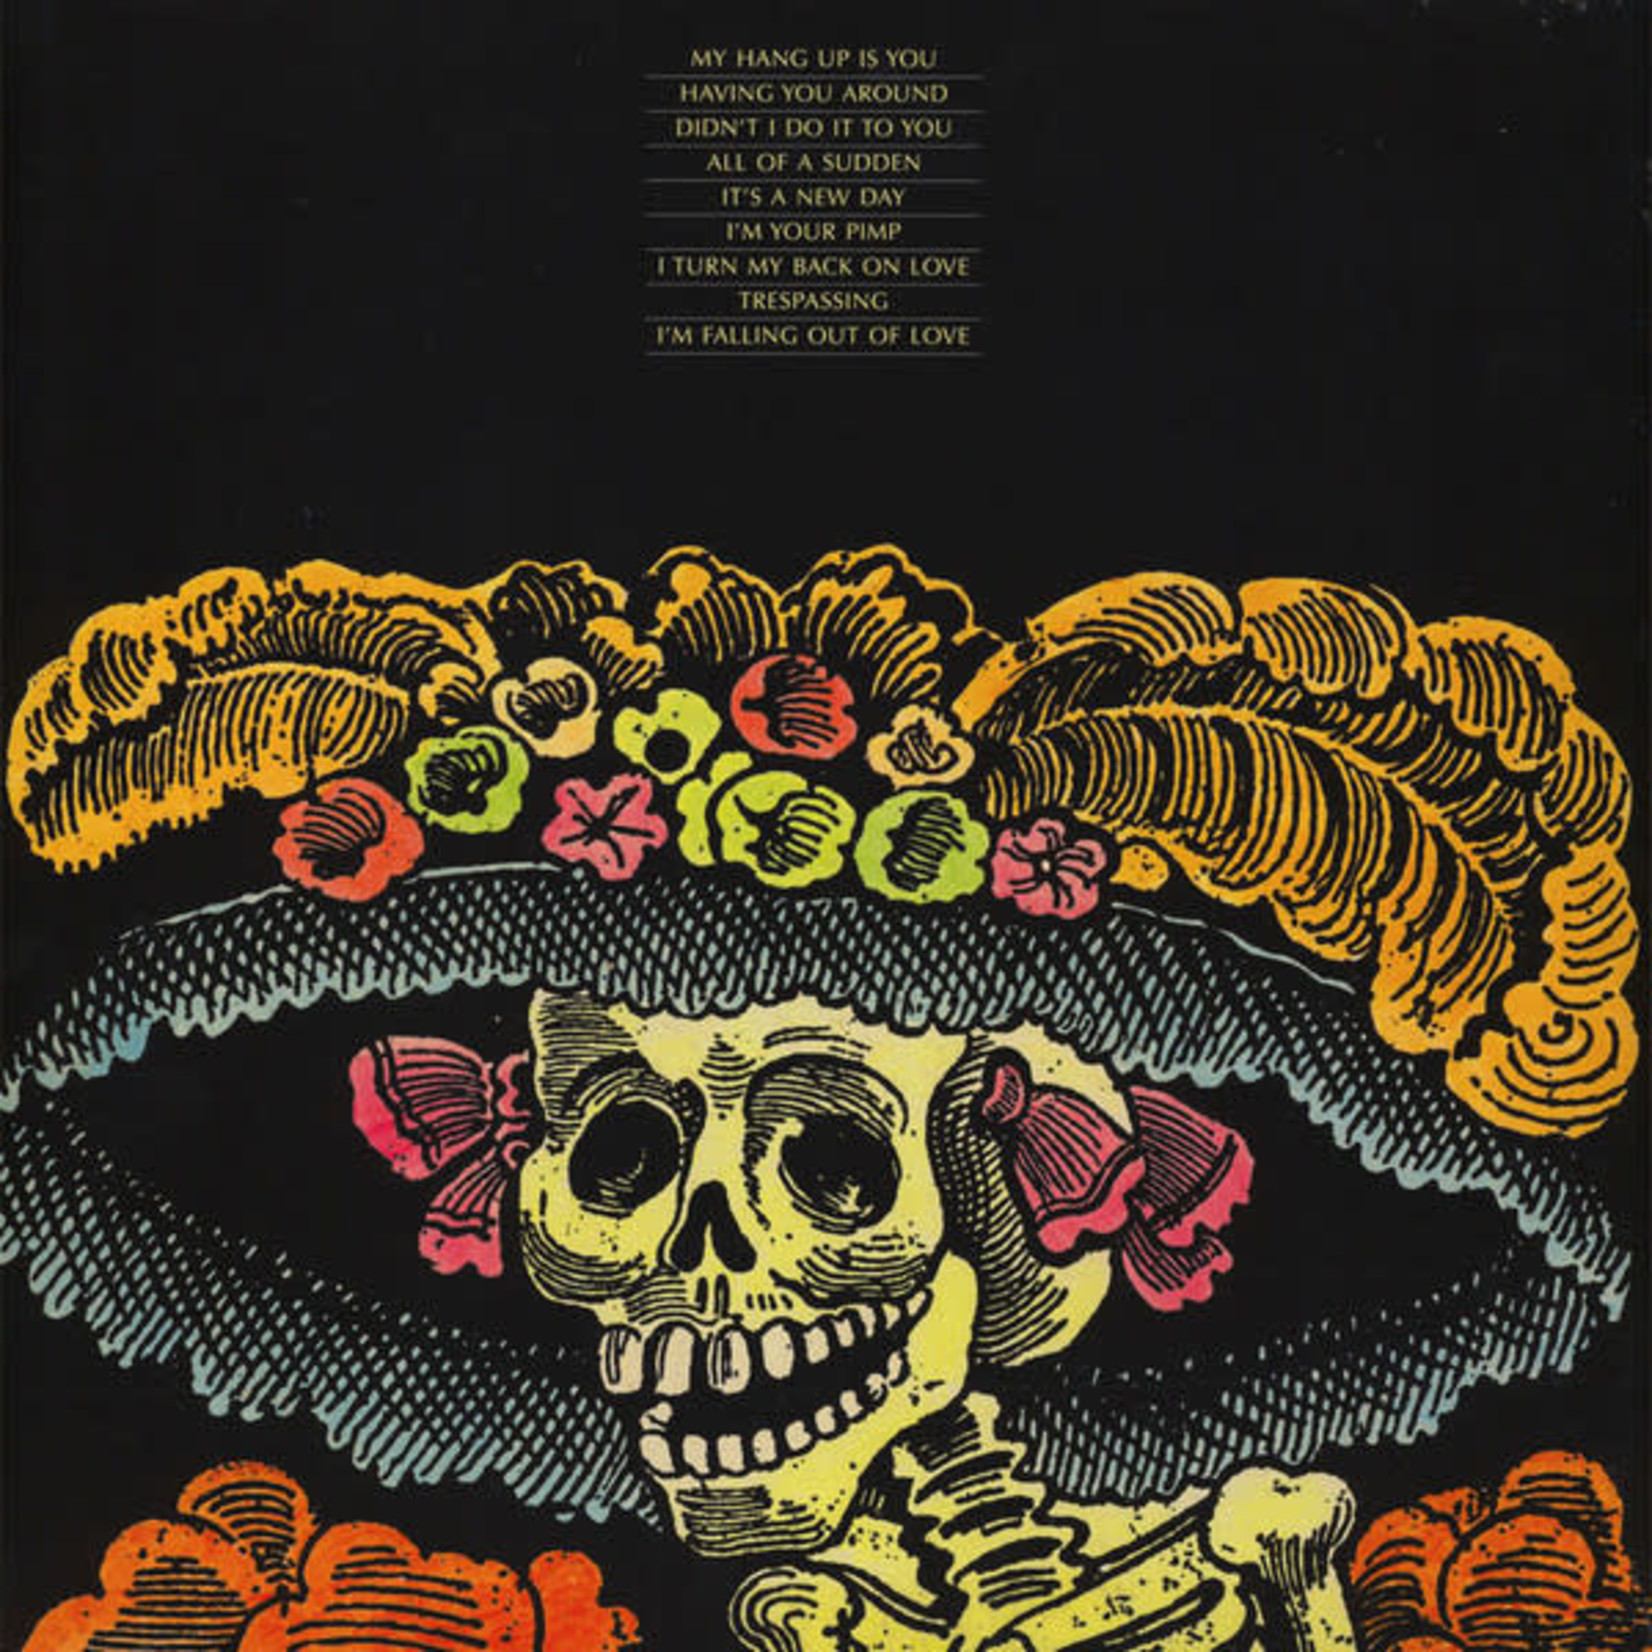 Mr Bongo Skull Snaps - Skull Snaps (LP)